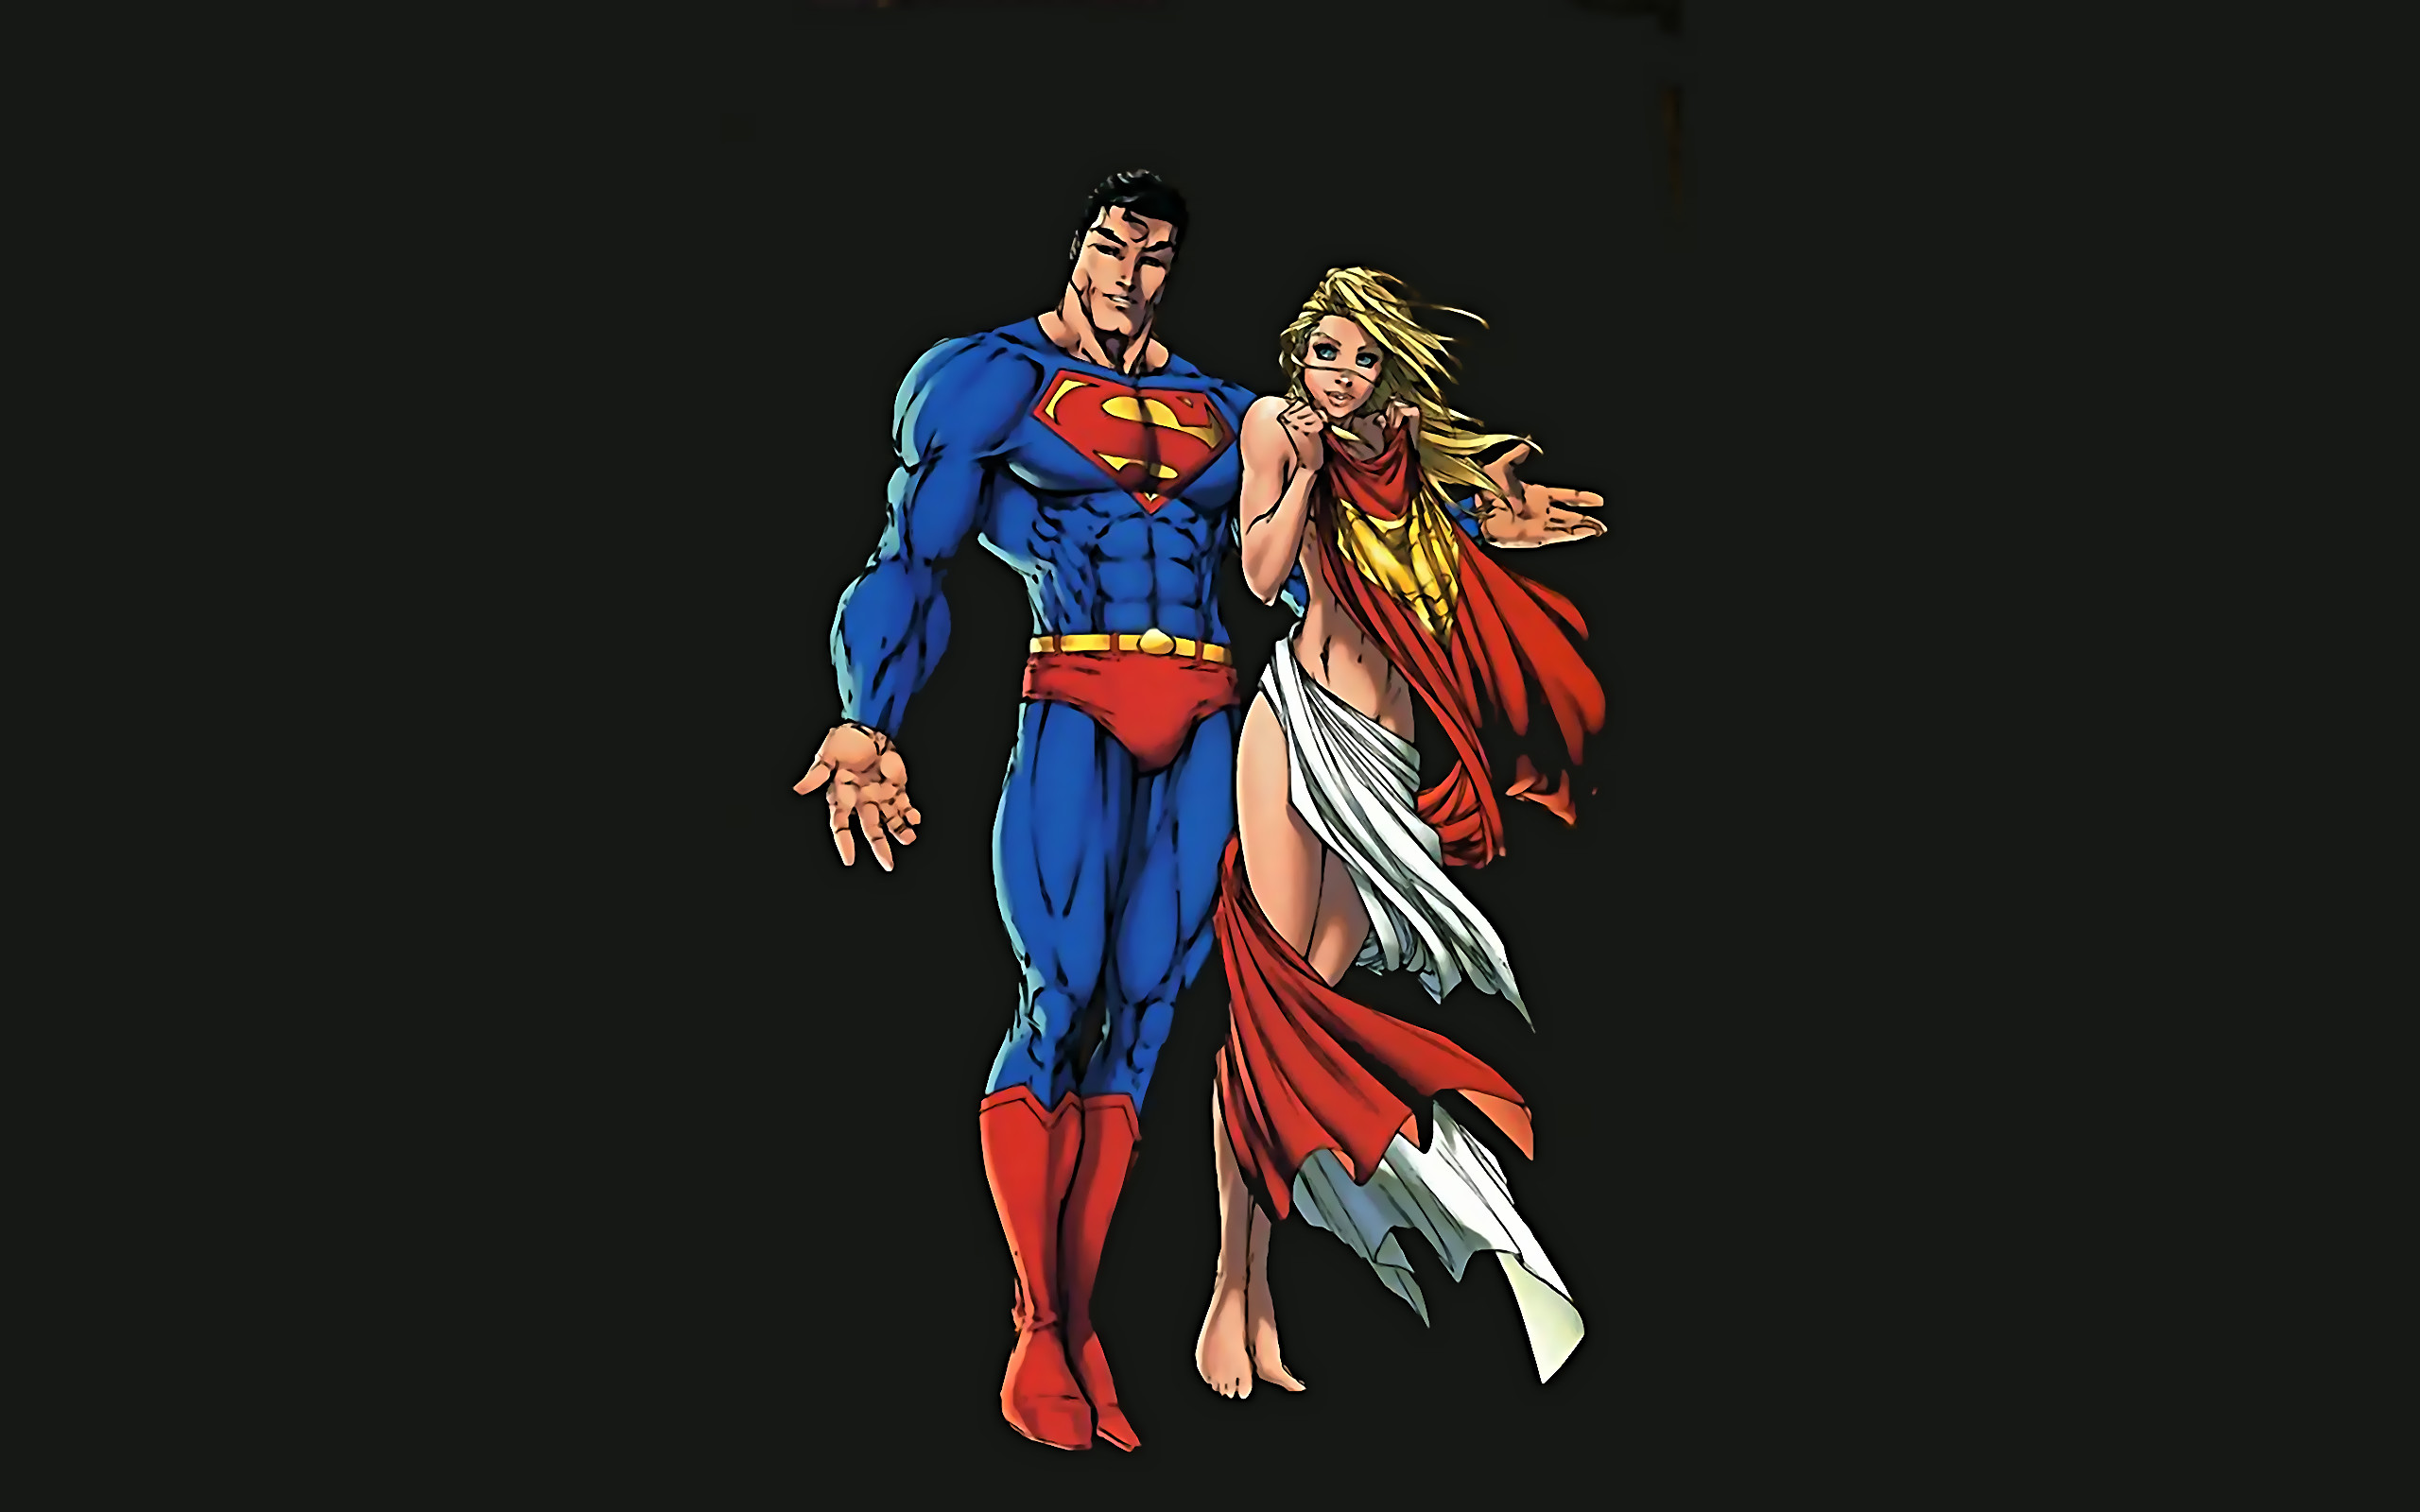 2560x1600 supergirl images | Dc comics superman supergirl wallpaper background